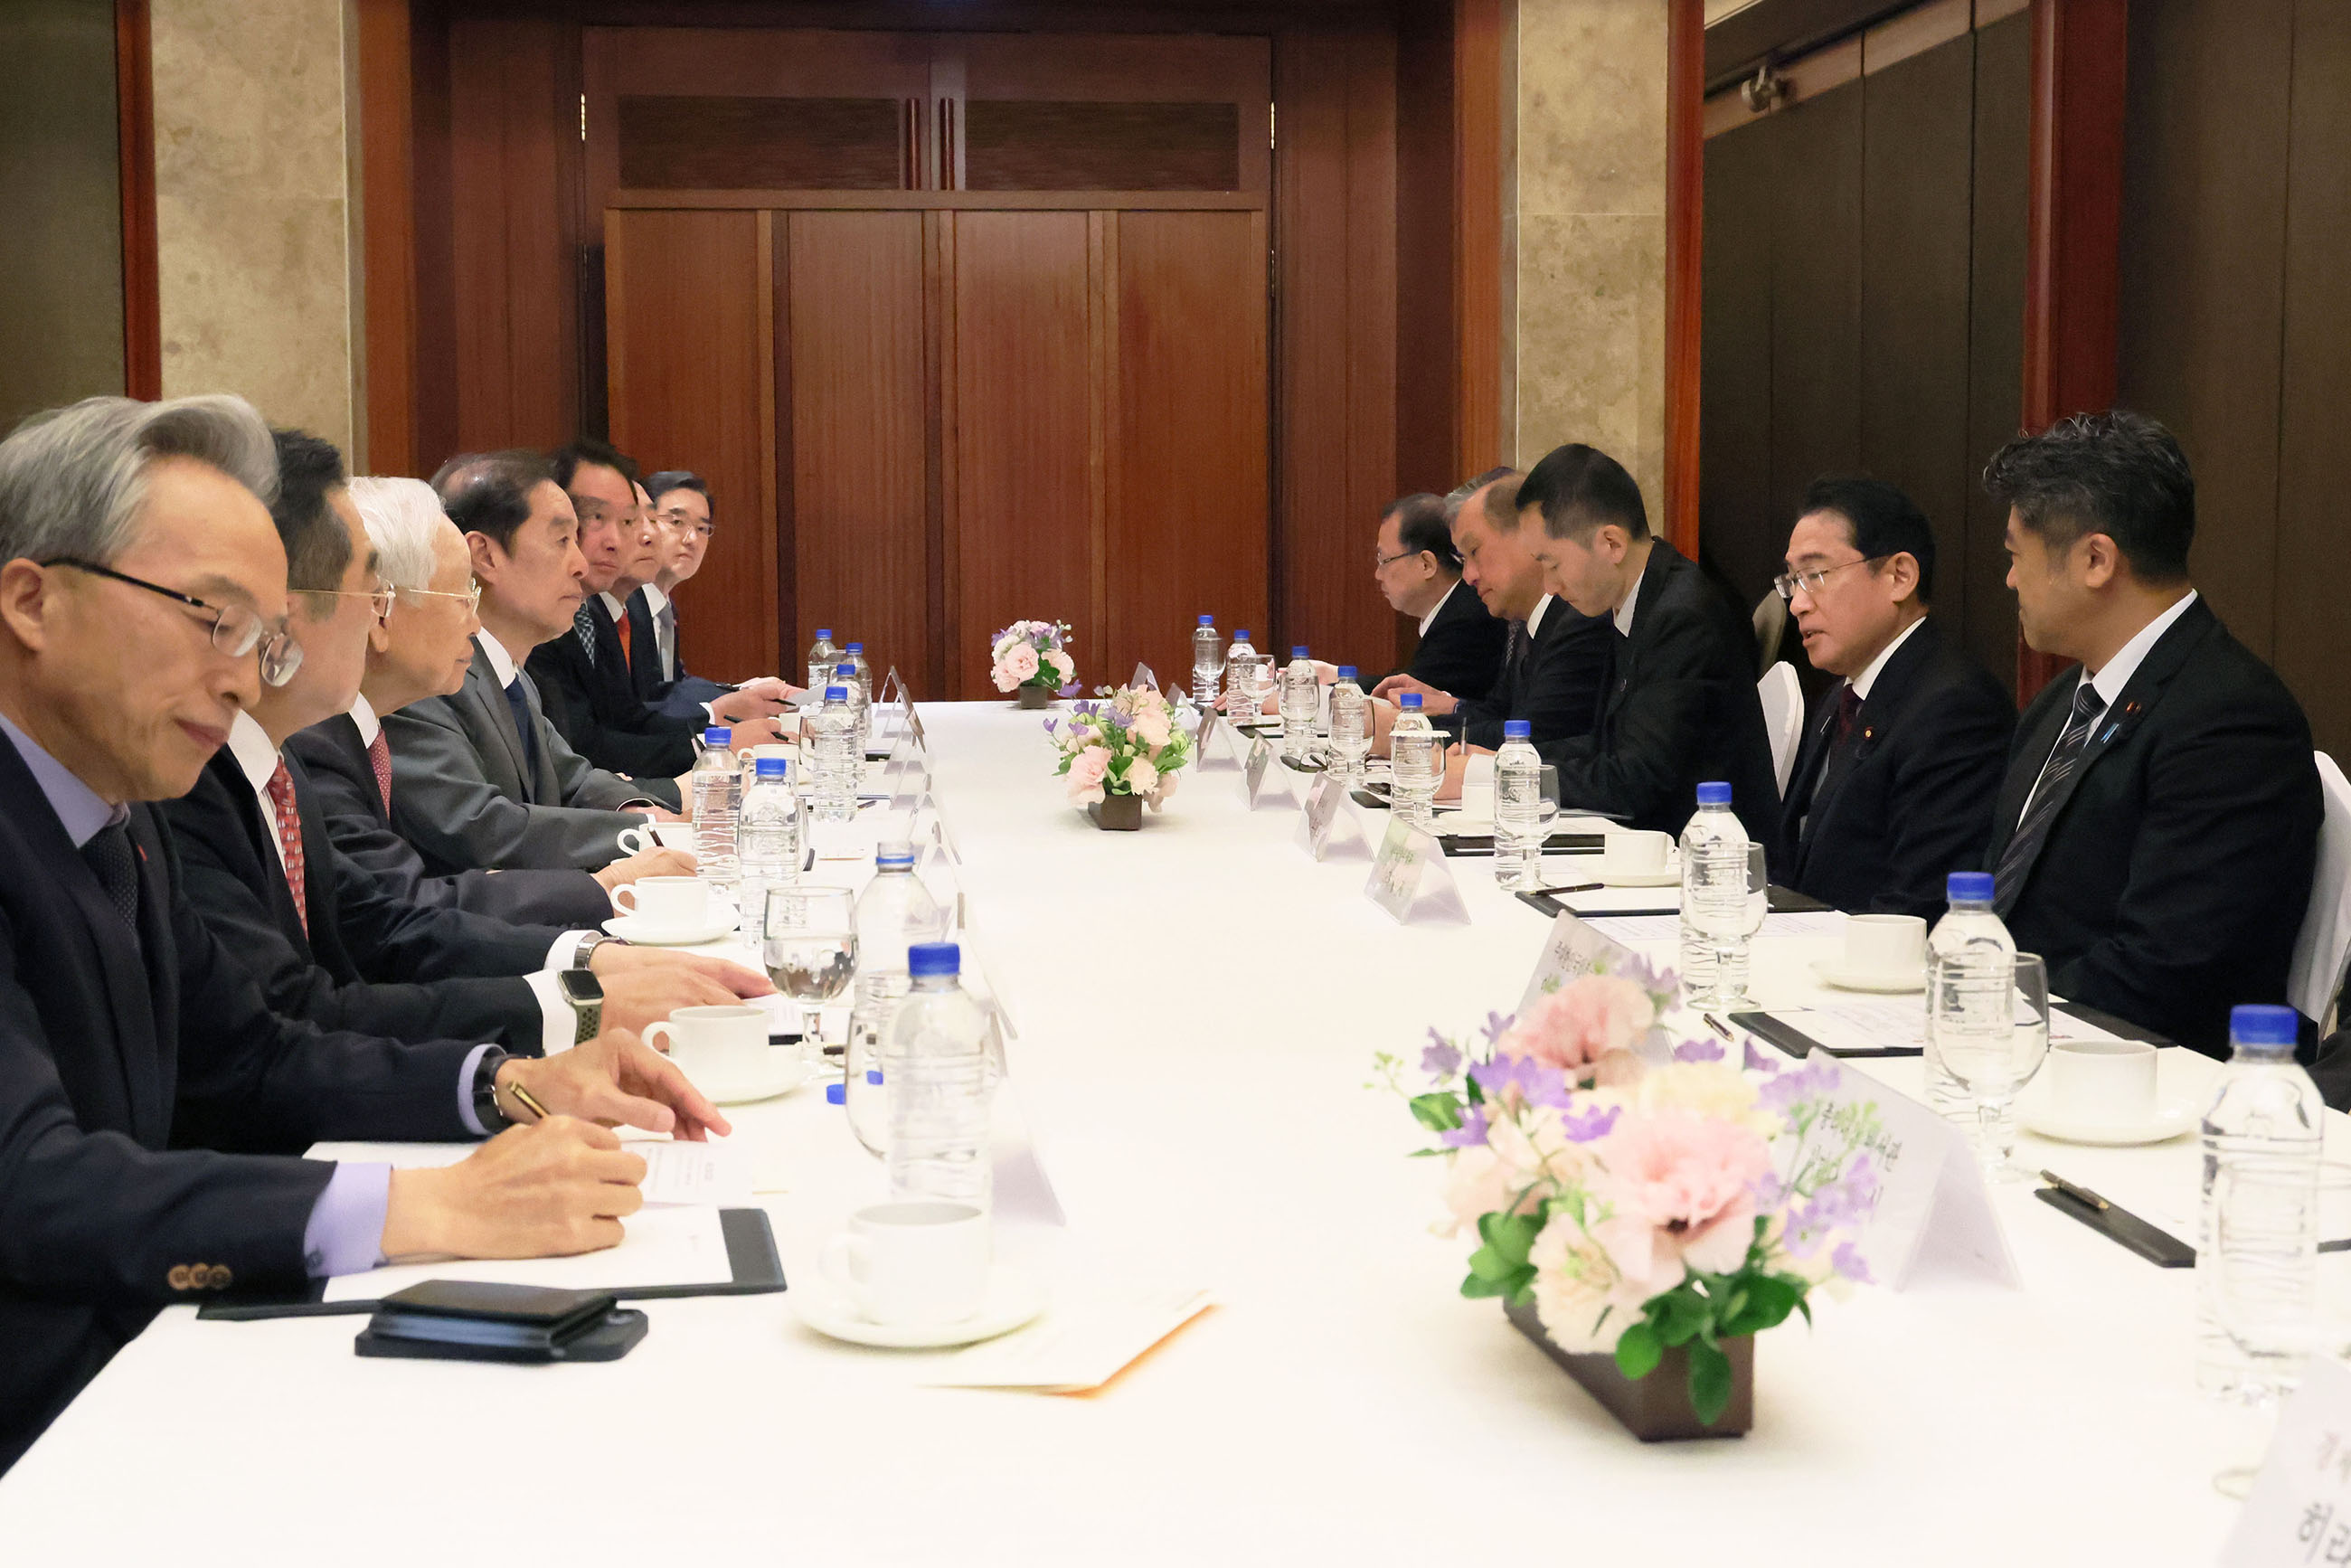 Prime Minister Kishida having a talk with members of Korean business community (1)